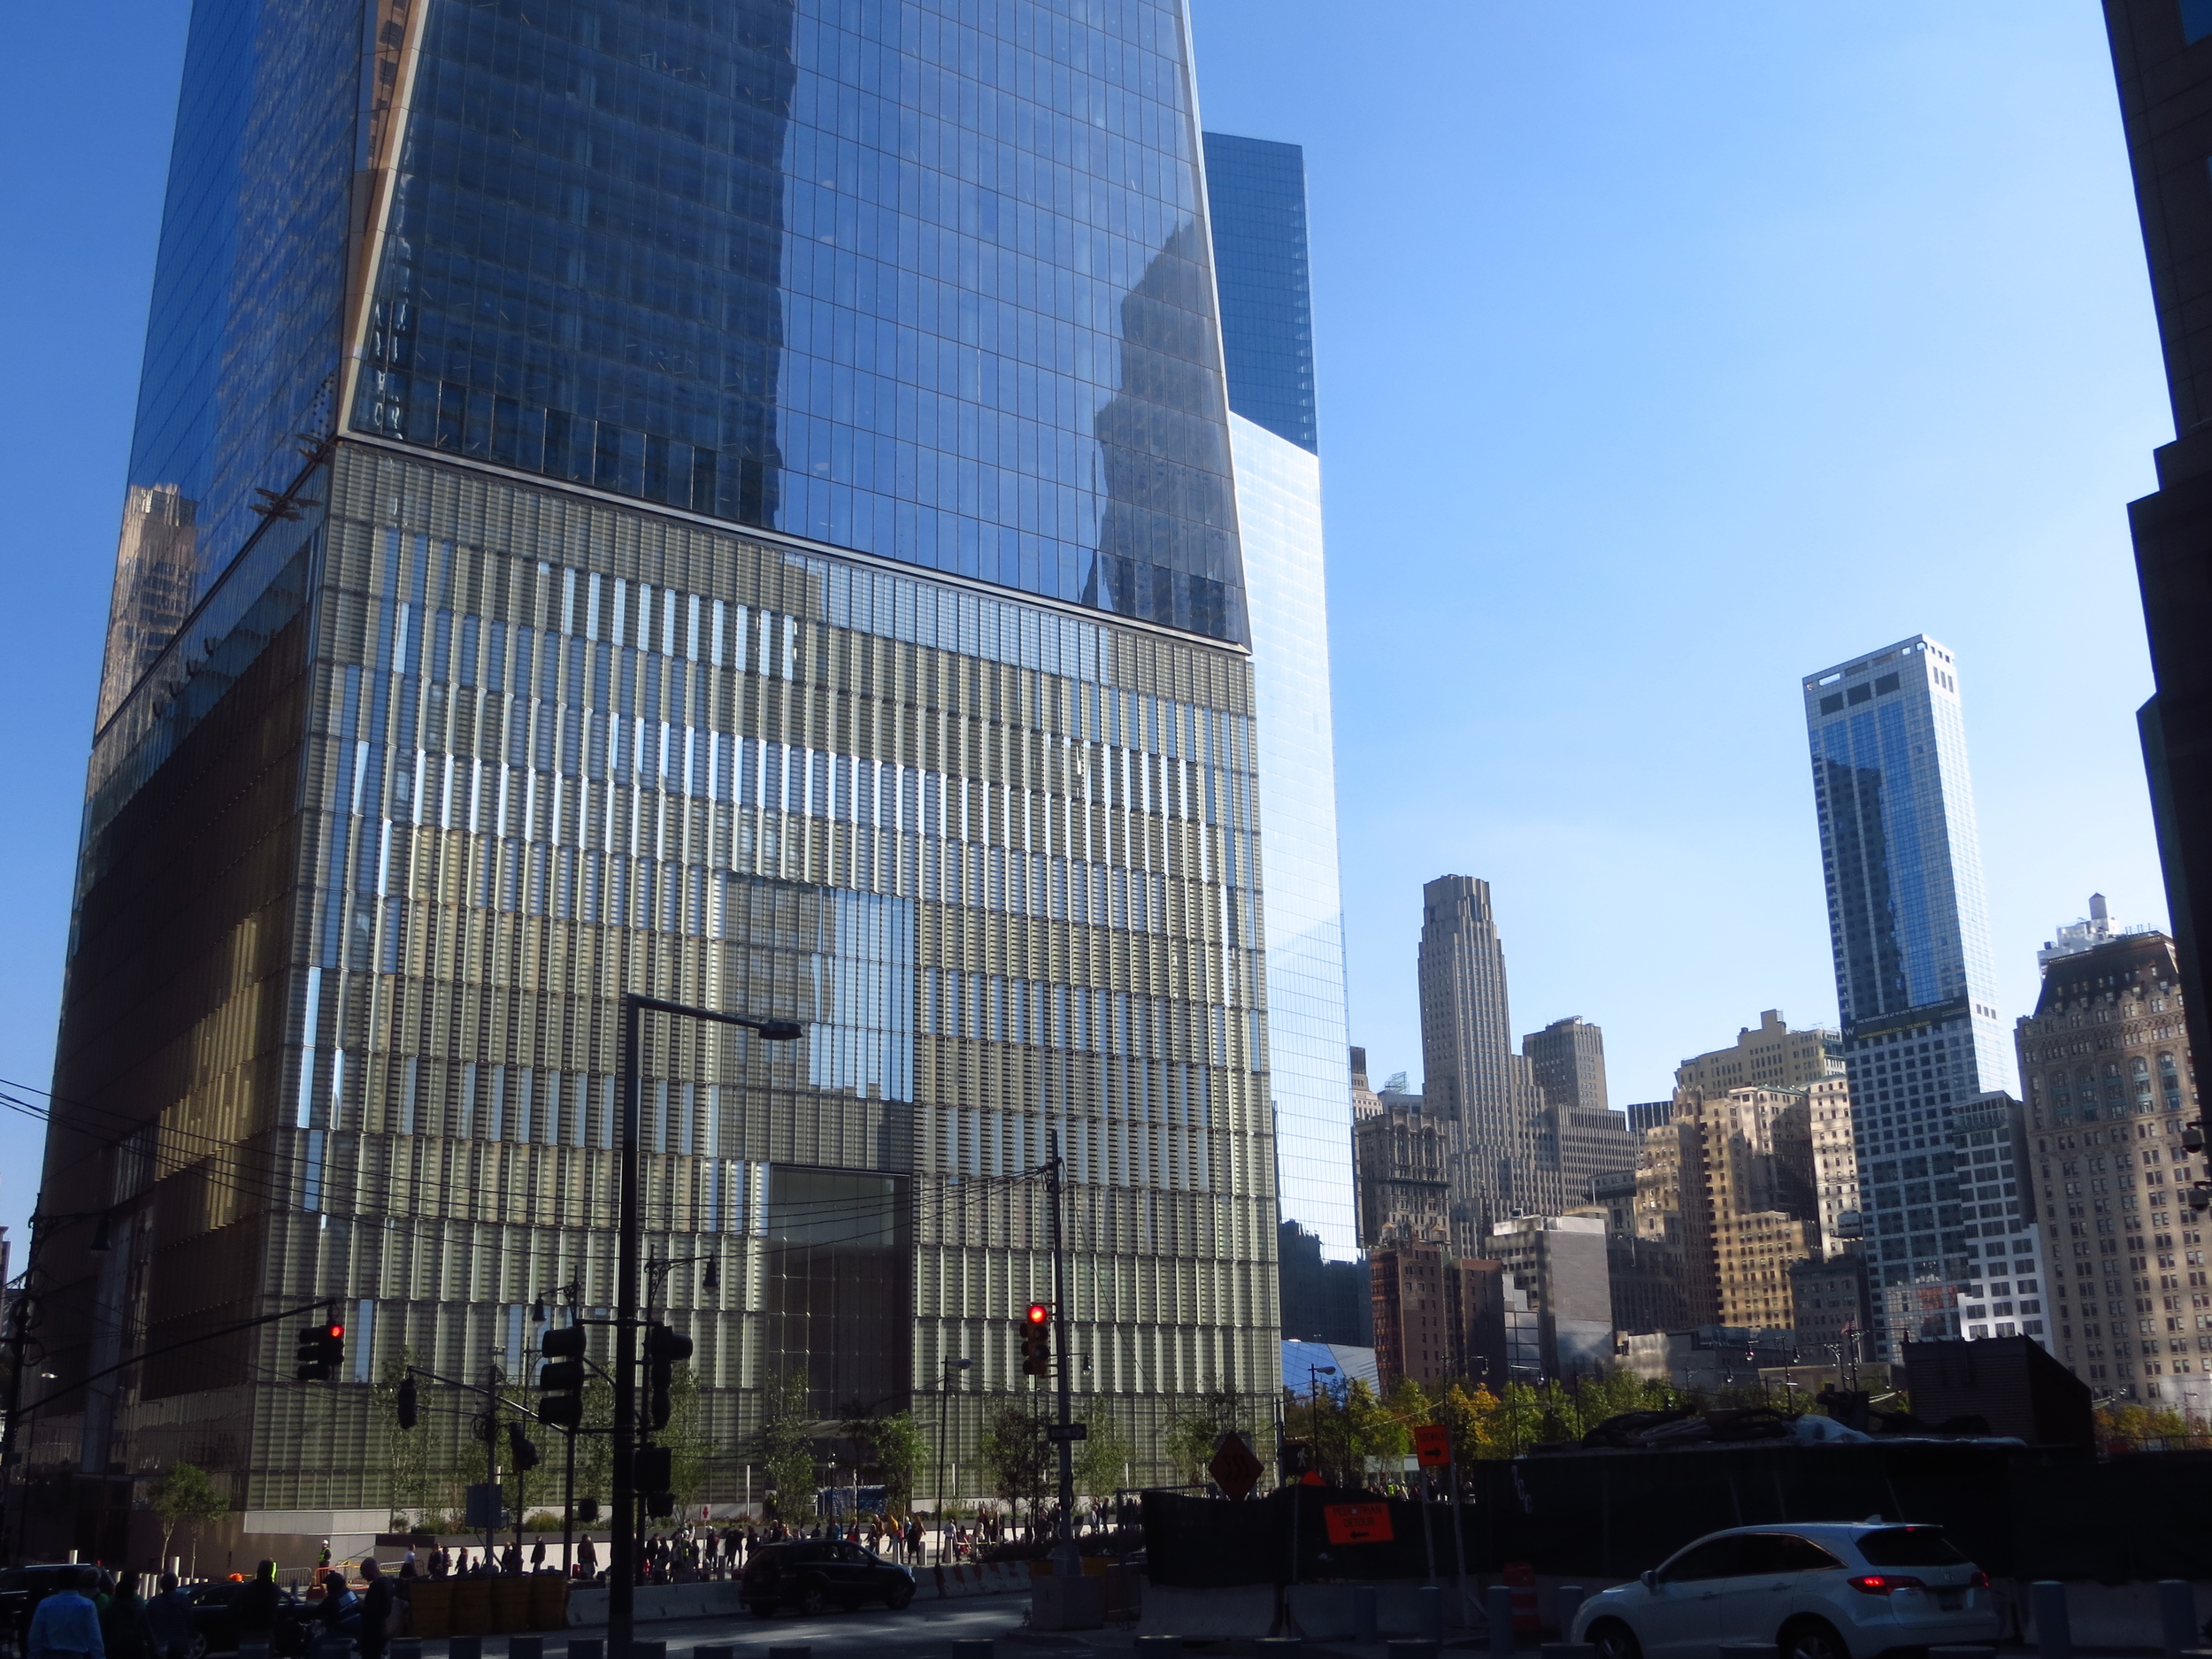 Base of 1 WTC